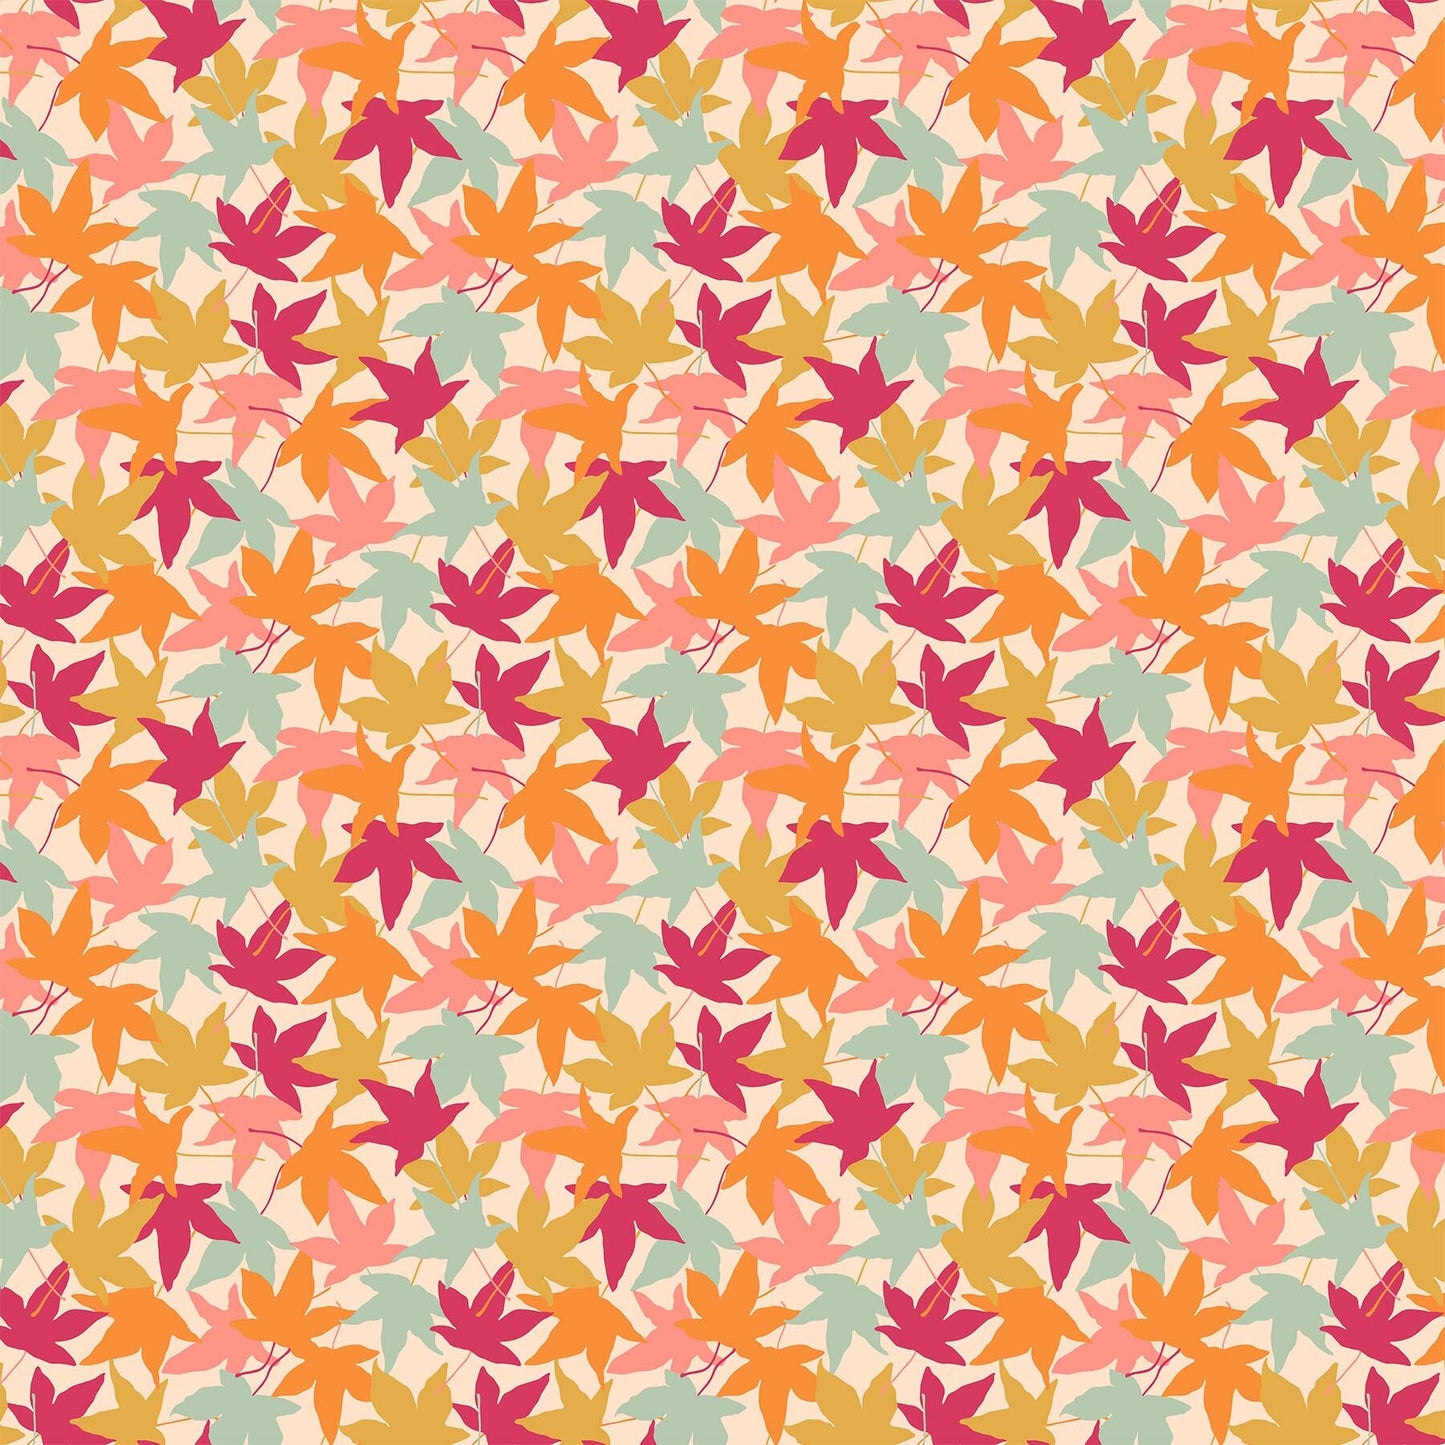 Splendor 13 Piece Fat Quarter Bundle, Figo FQSPLEN13-10, Orange Green Purple Pink Floral Quilt Fabric, 18 x 22 Fabric Cuts